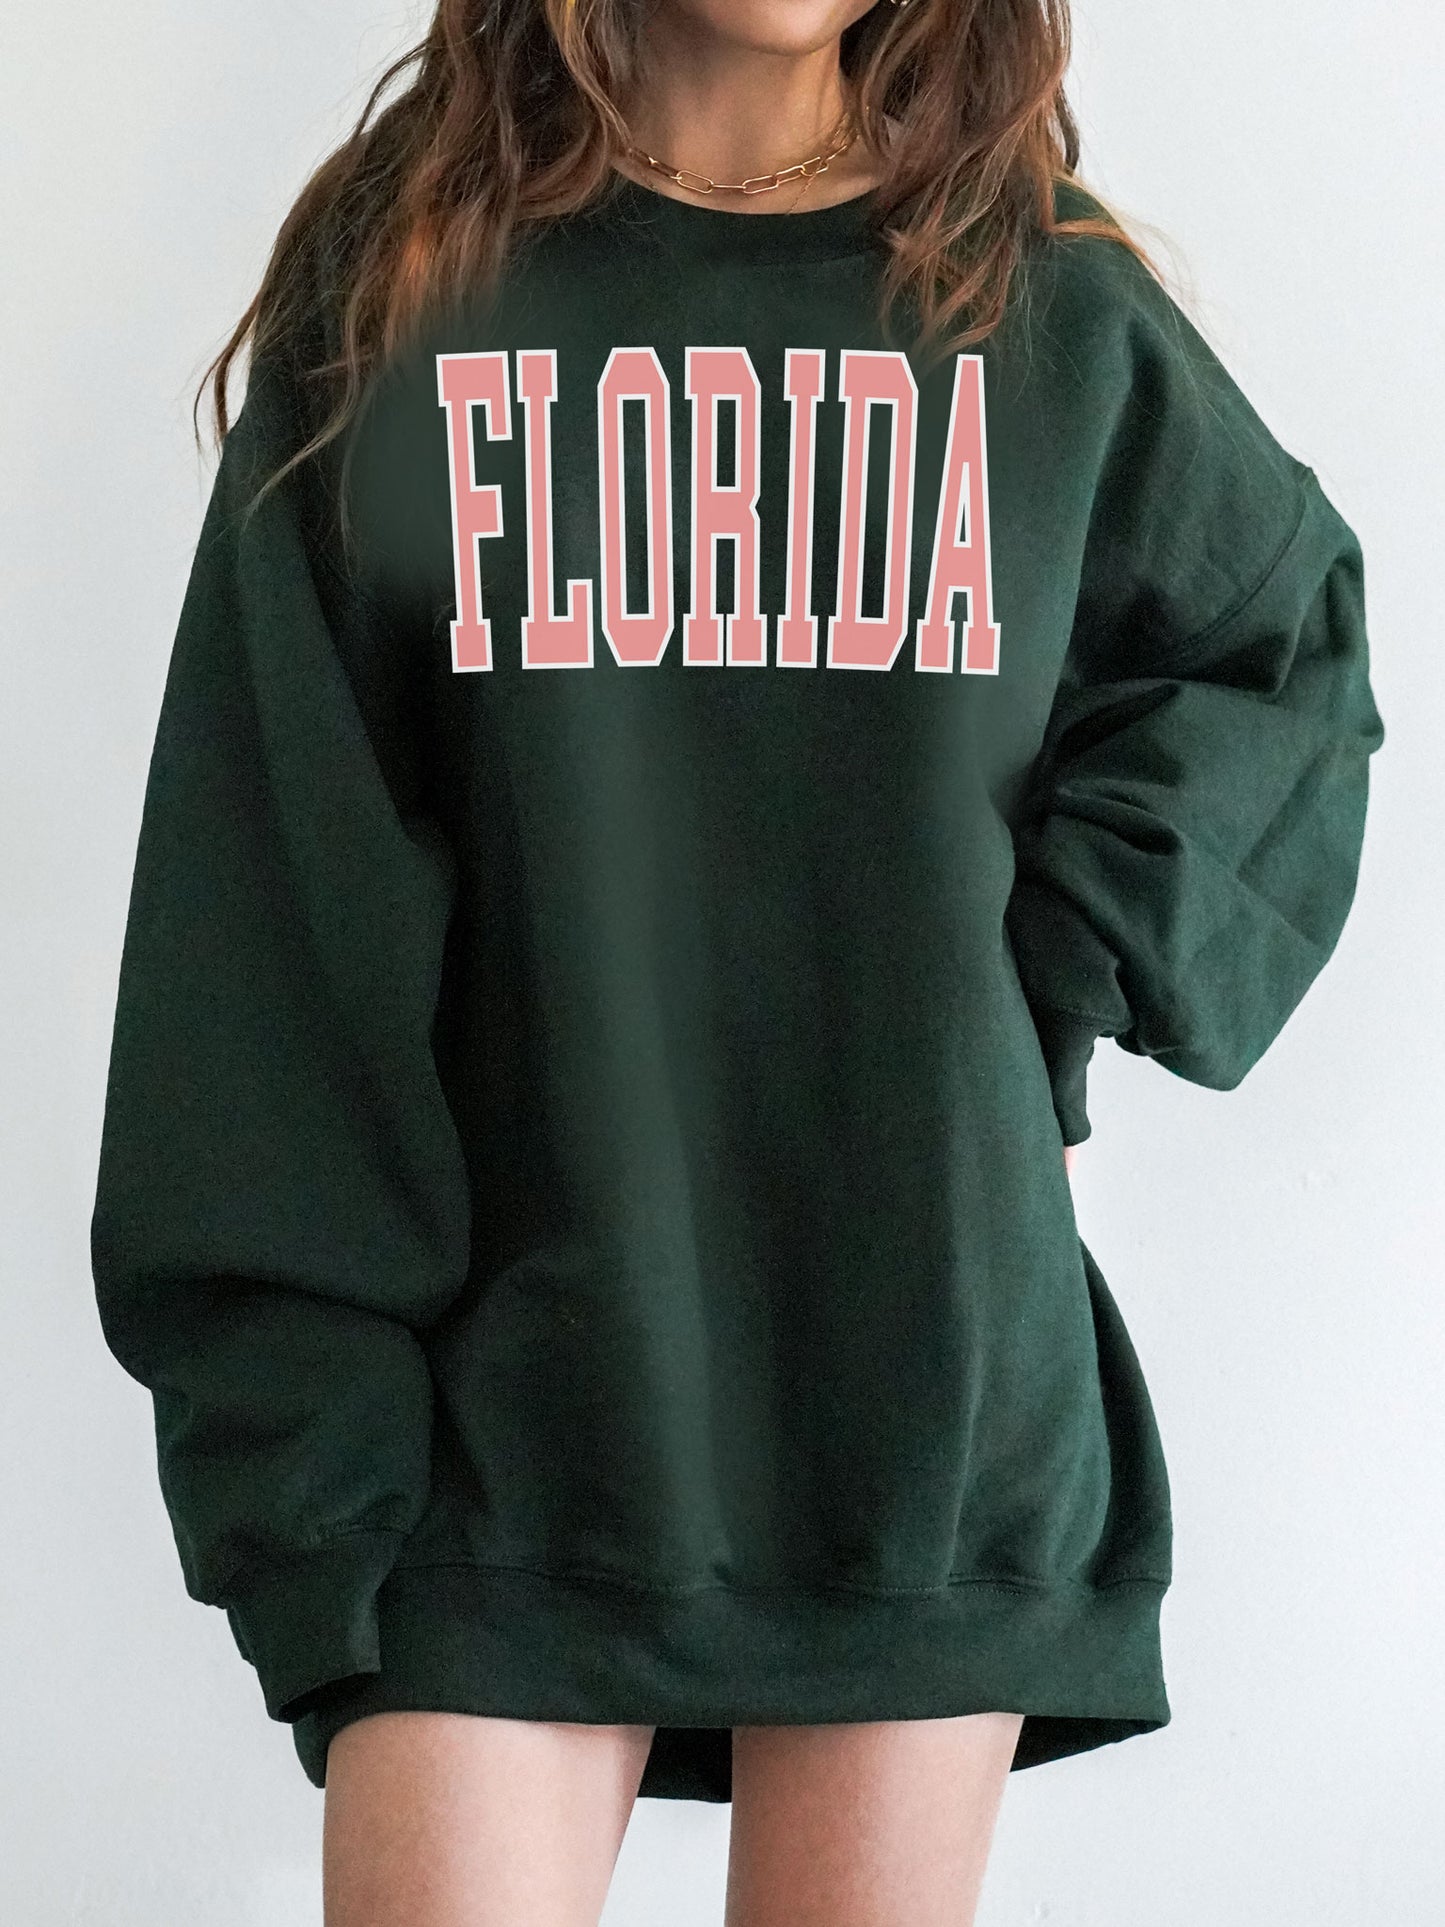 Florida Sweatshirt - Peach Ink